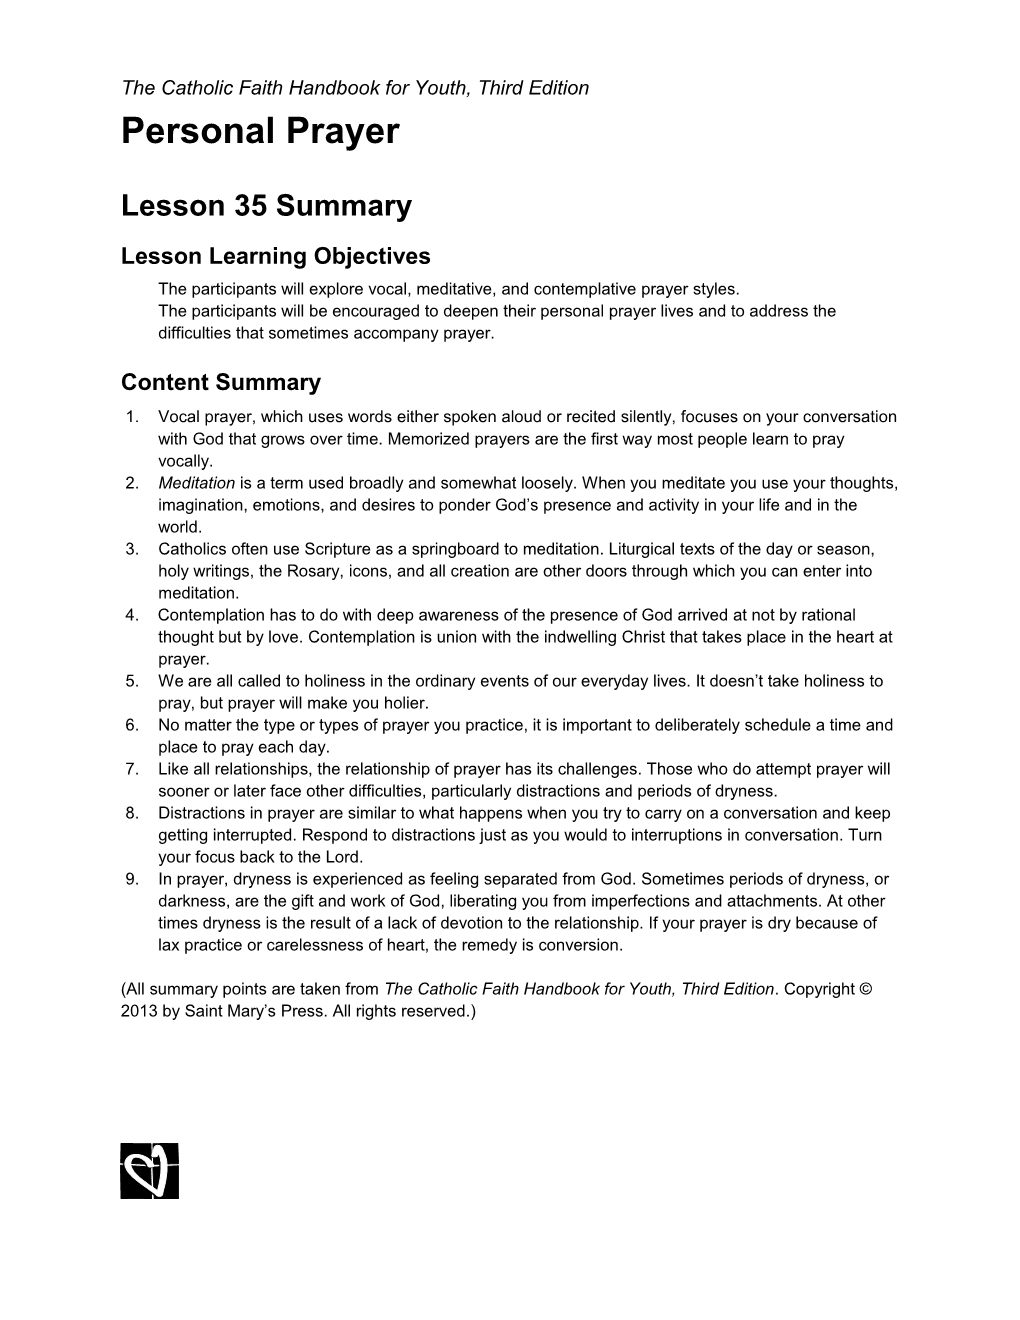 Lesson 35 Summary